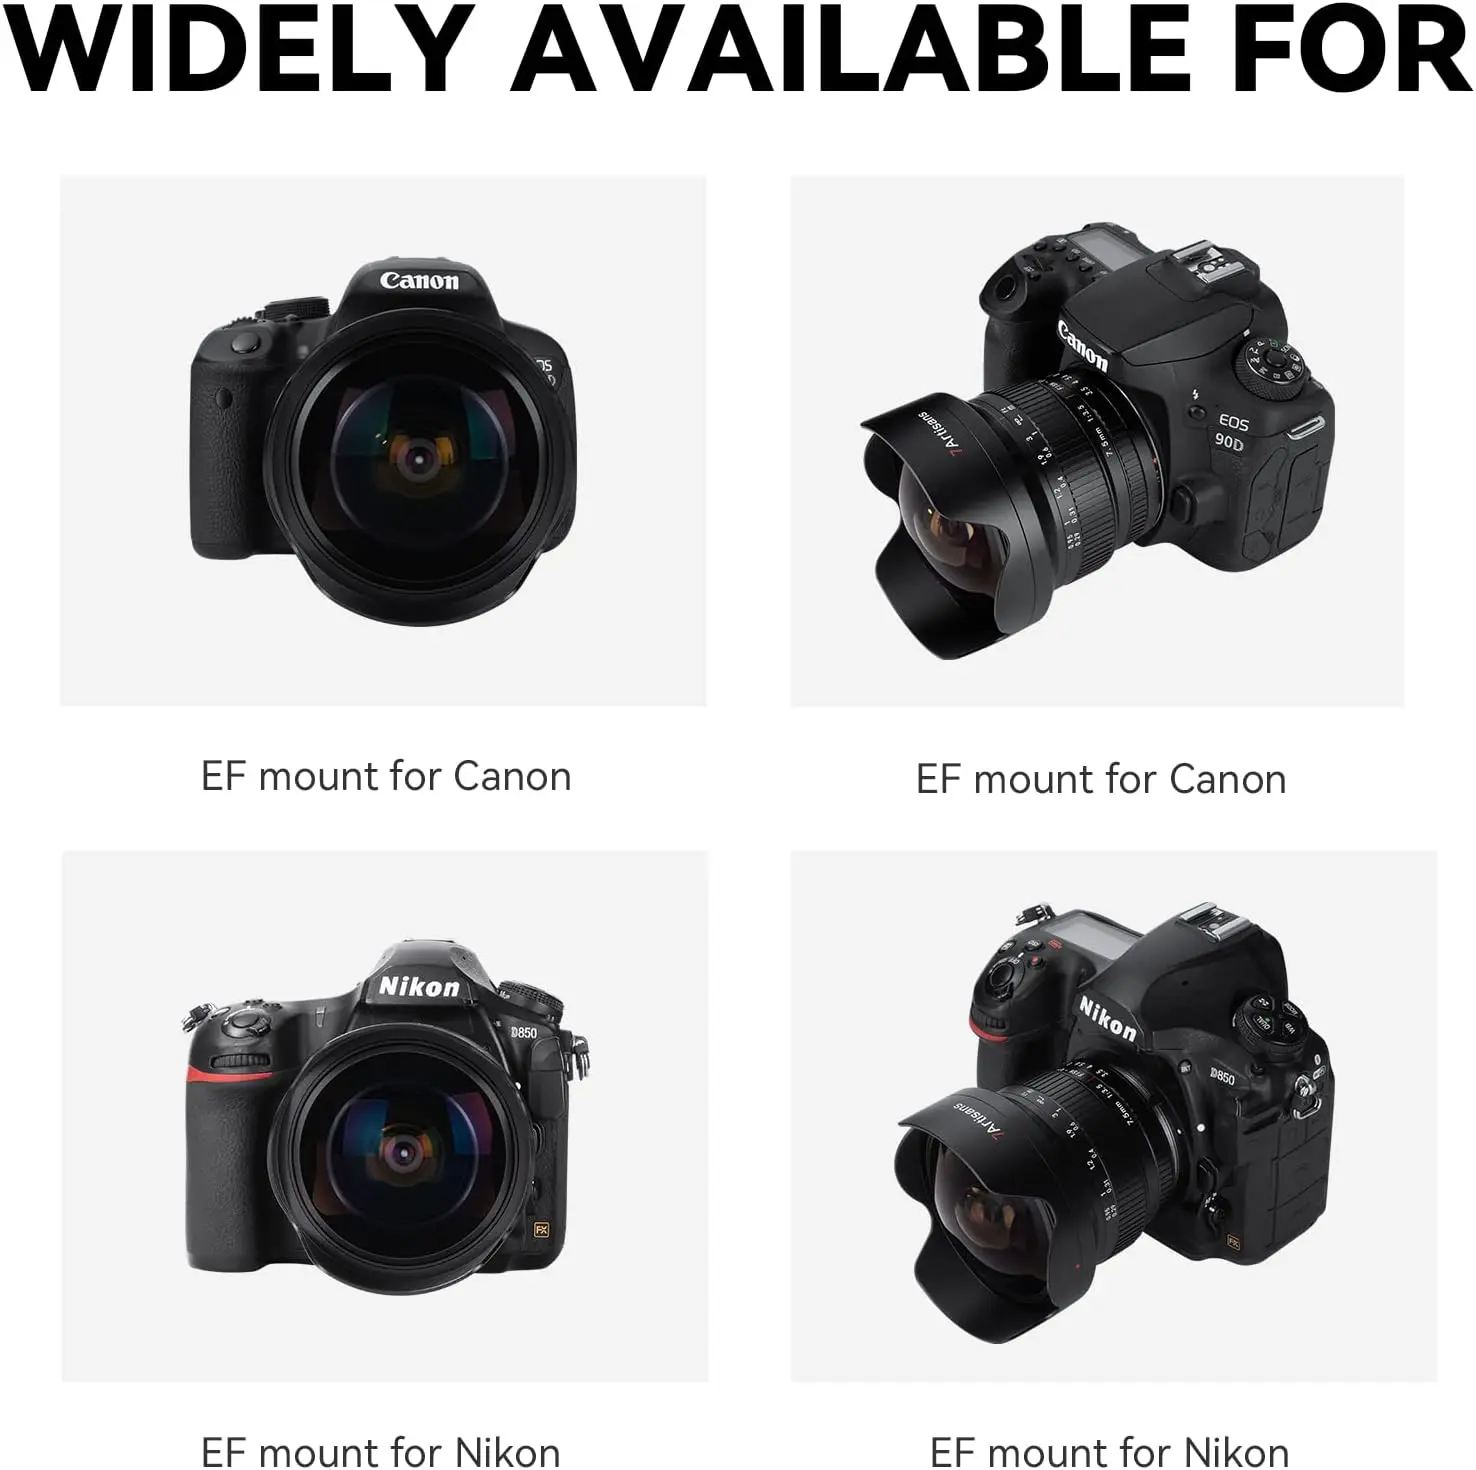 7artisans 7.5mm F3.5 Manual Focus APS-C 205° Ultra Wide-Angle Fisheye Lens For Canon EOS Rebel T7 Nikon F D750 D90 DSLR Cameras